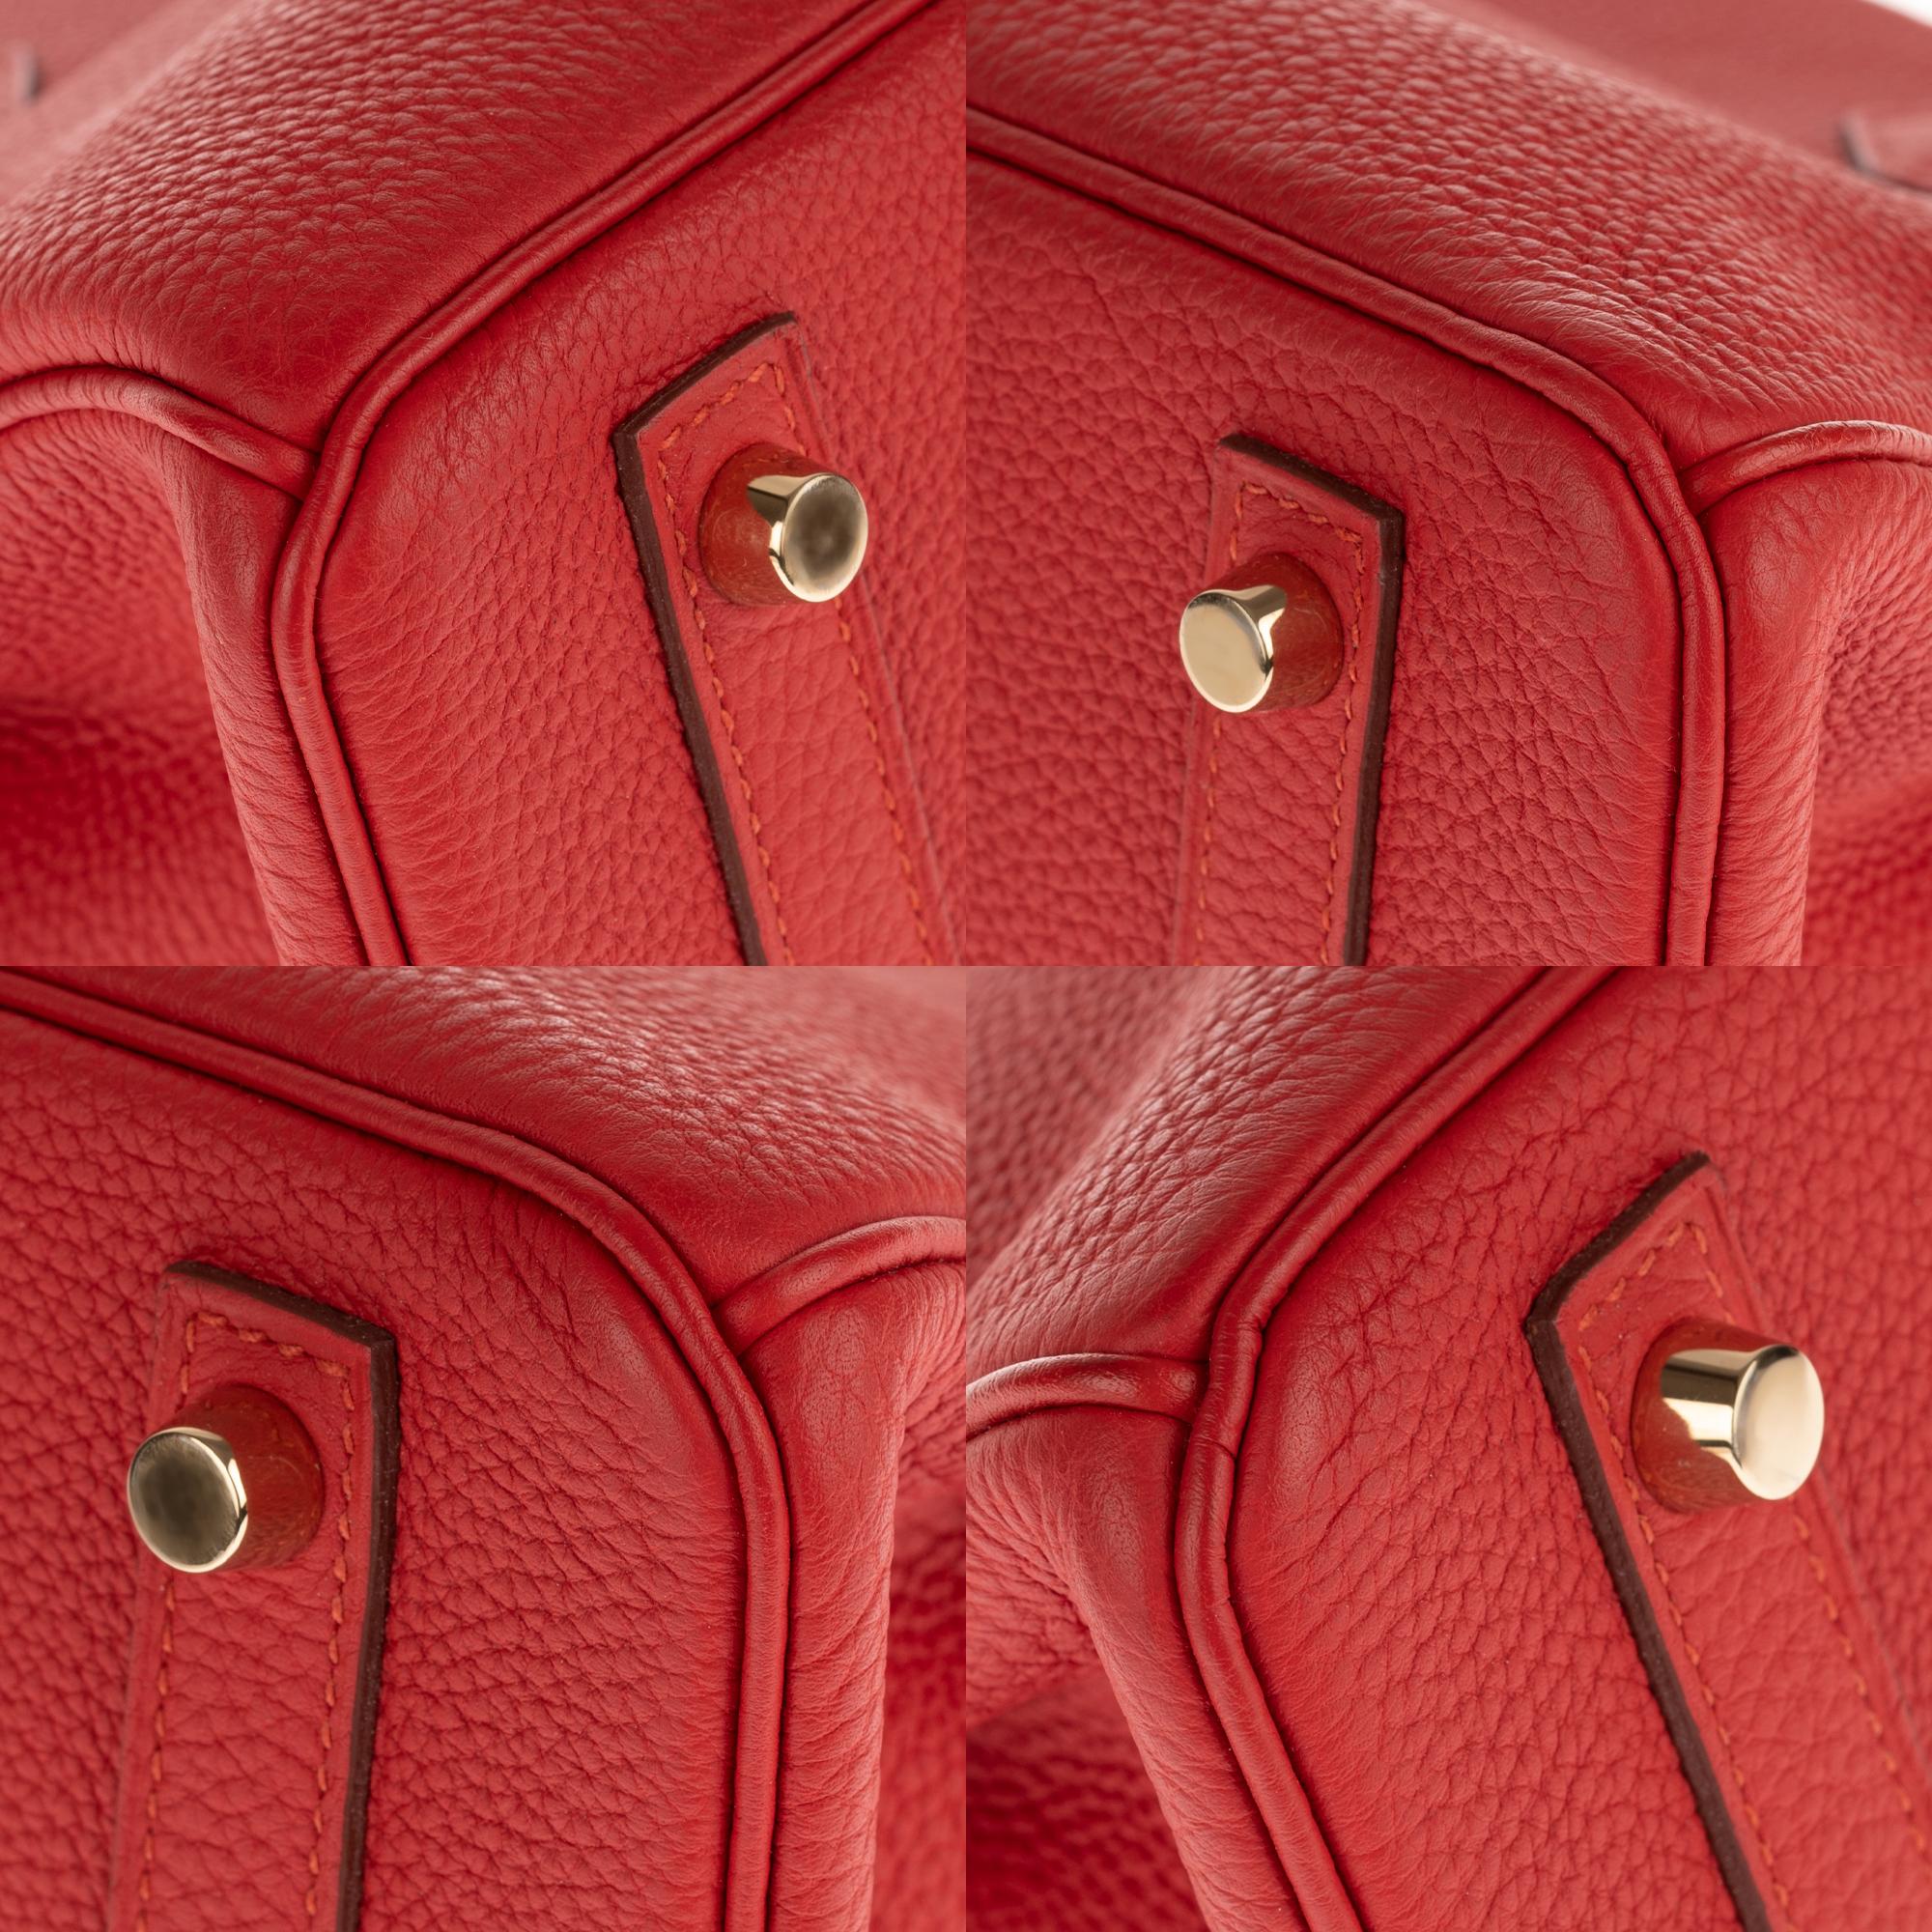 Beautiful Hermès Birkin 30 handbag in Red Togo leather, gold hardware  5